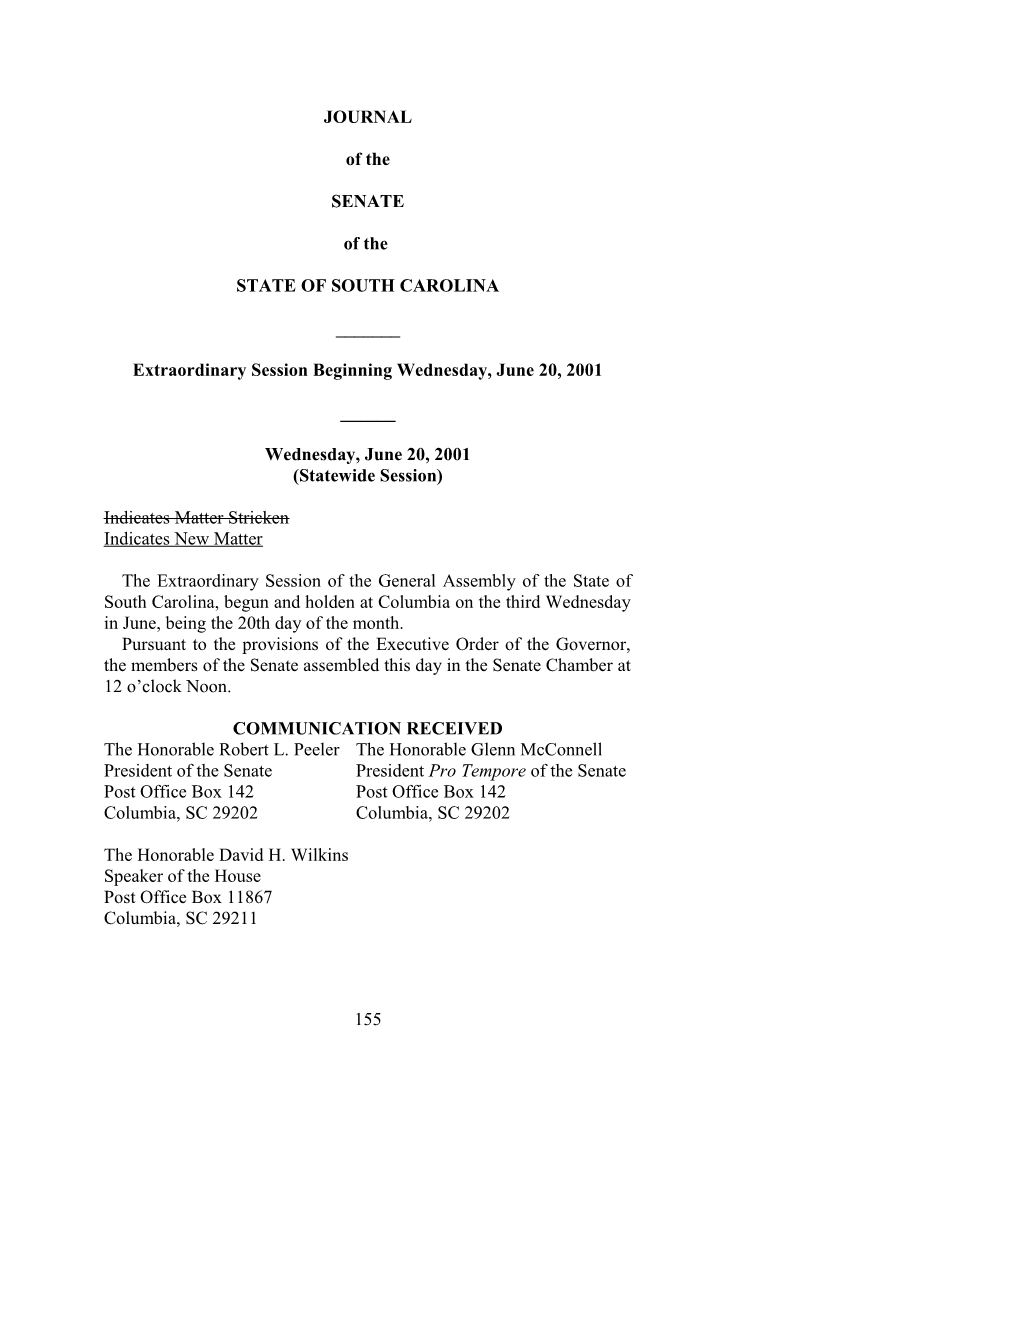 Senate Journal for June 20, 2001 - South Carolina Legislature Online